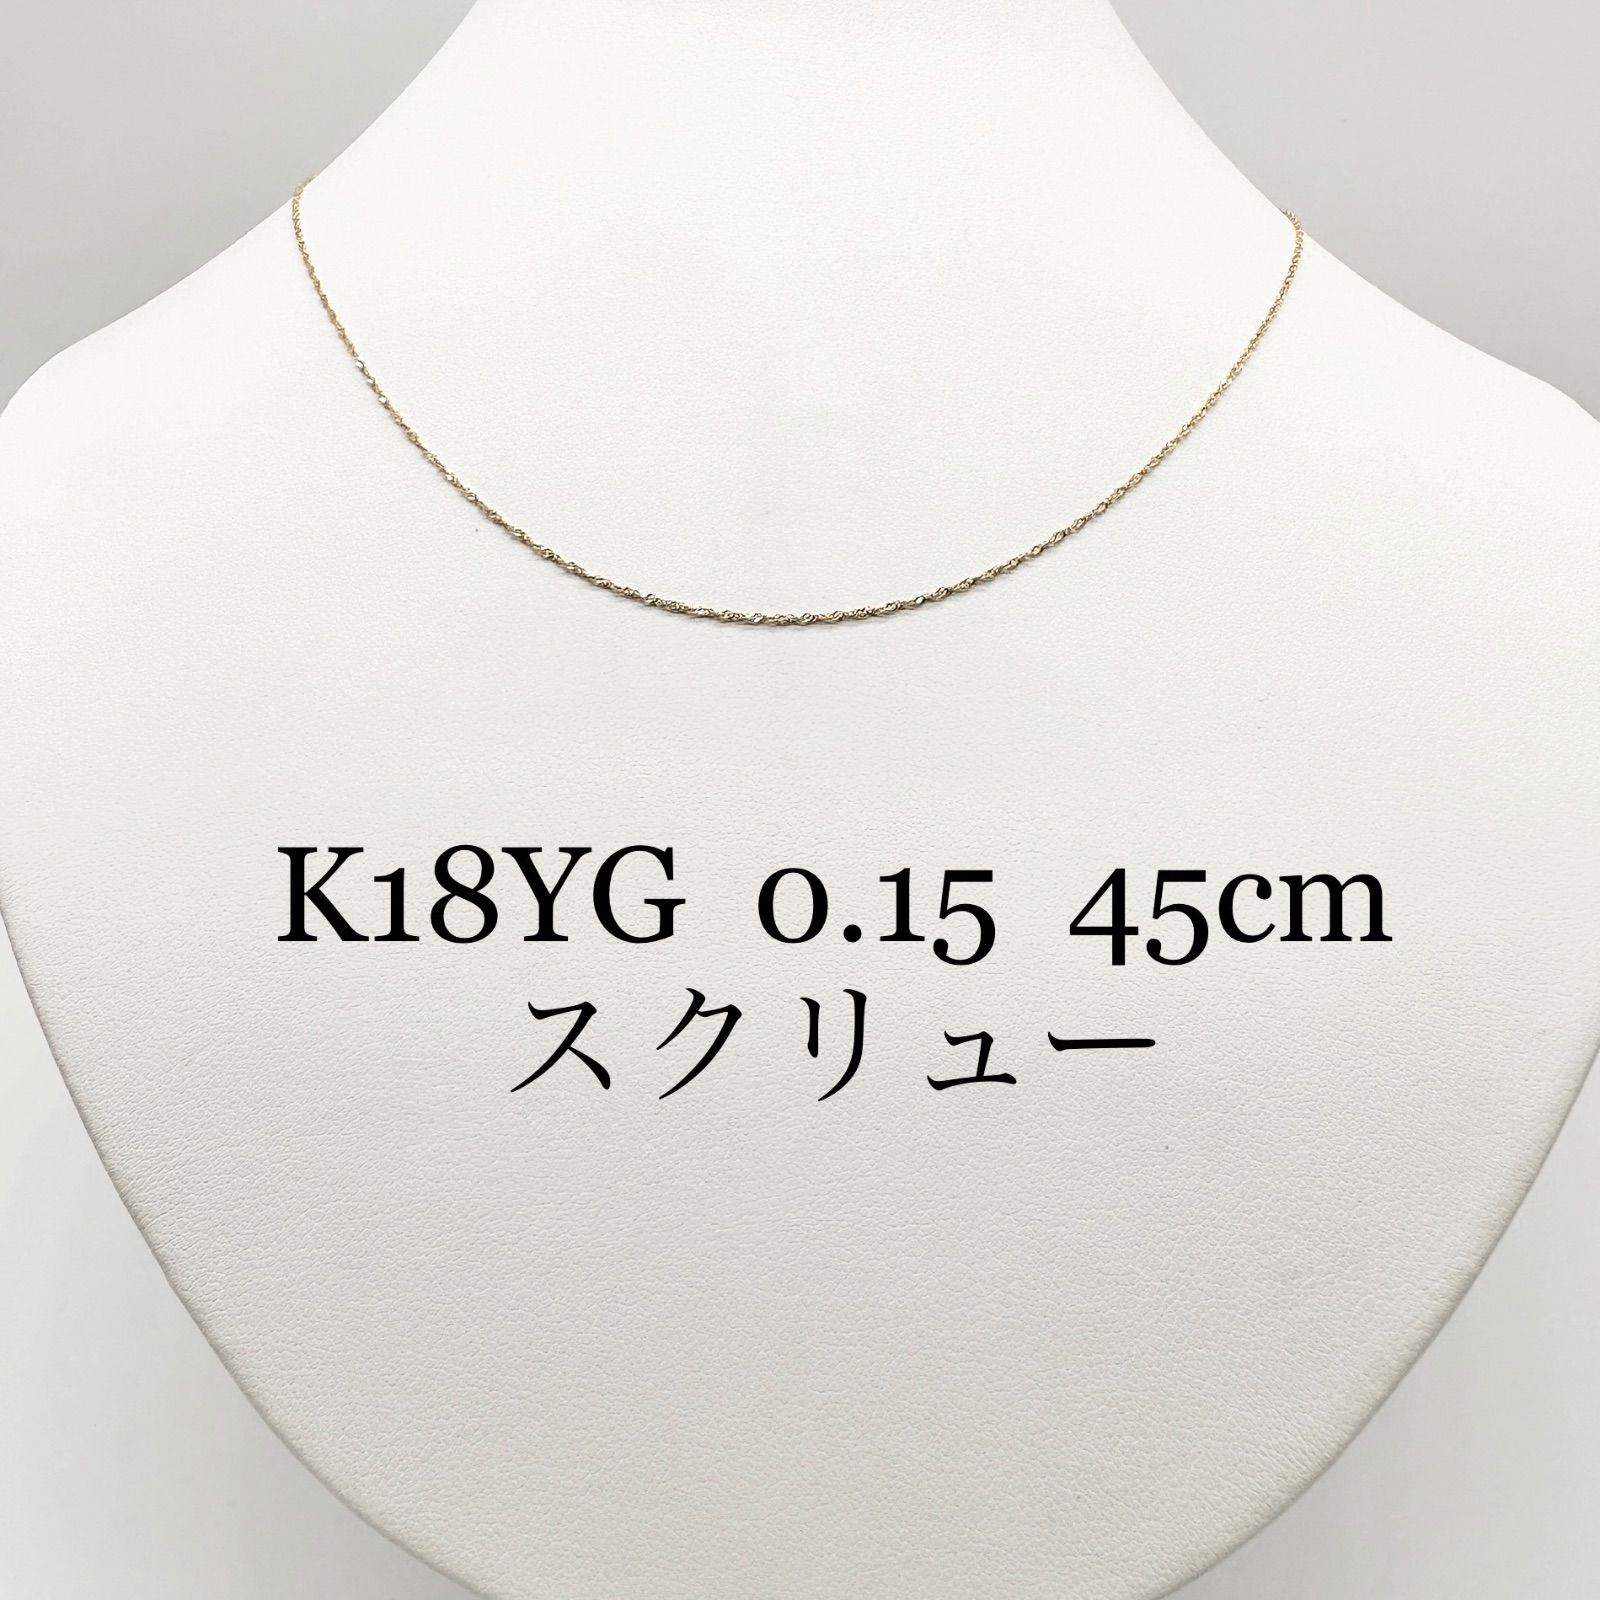 K18YG イエローゴールド 0.15スクリュー 45cmスライドピンネックレス